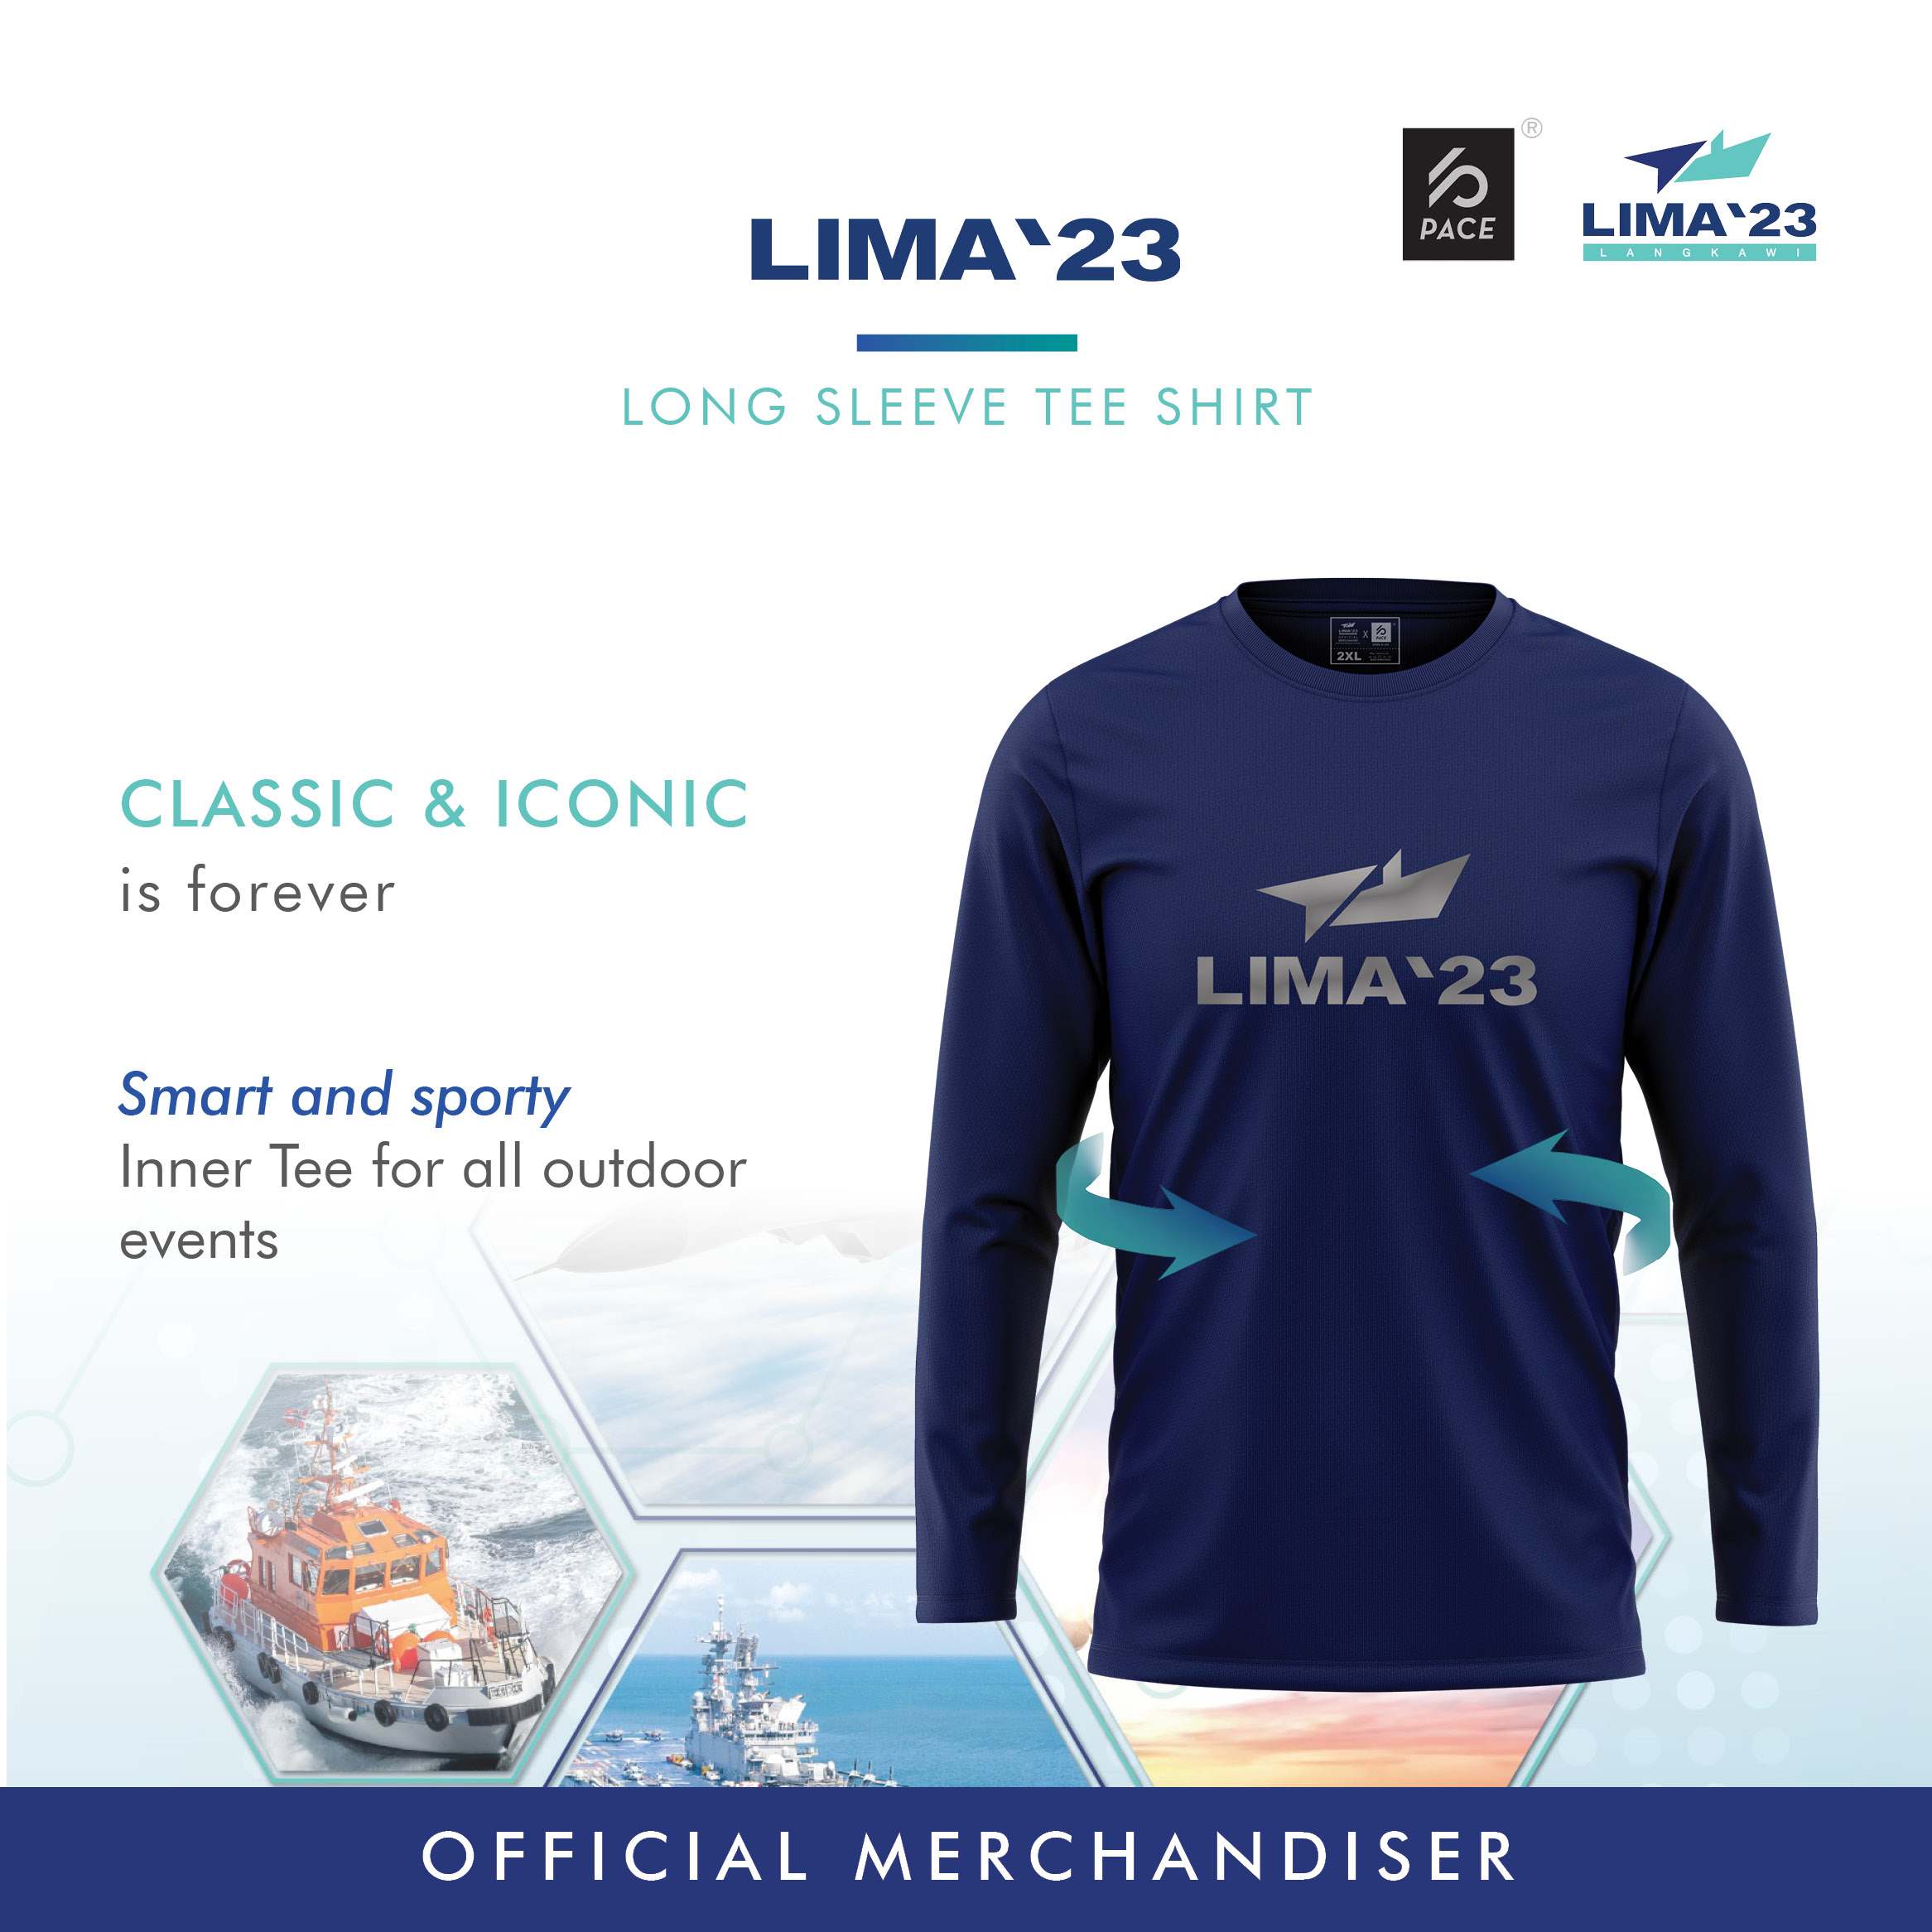 LIMA23 Long Sleeve Tee Shirt 